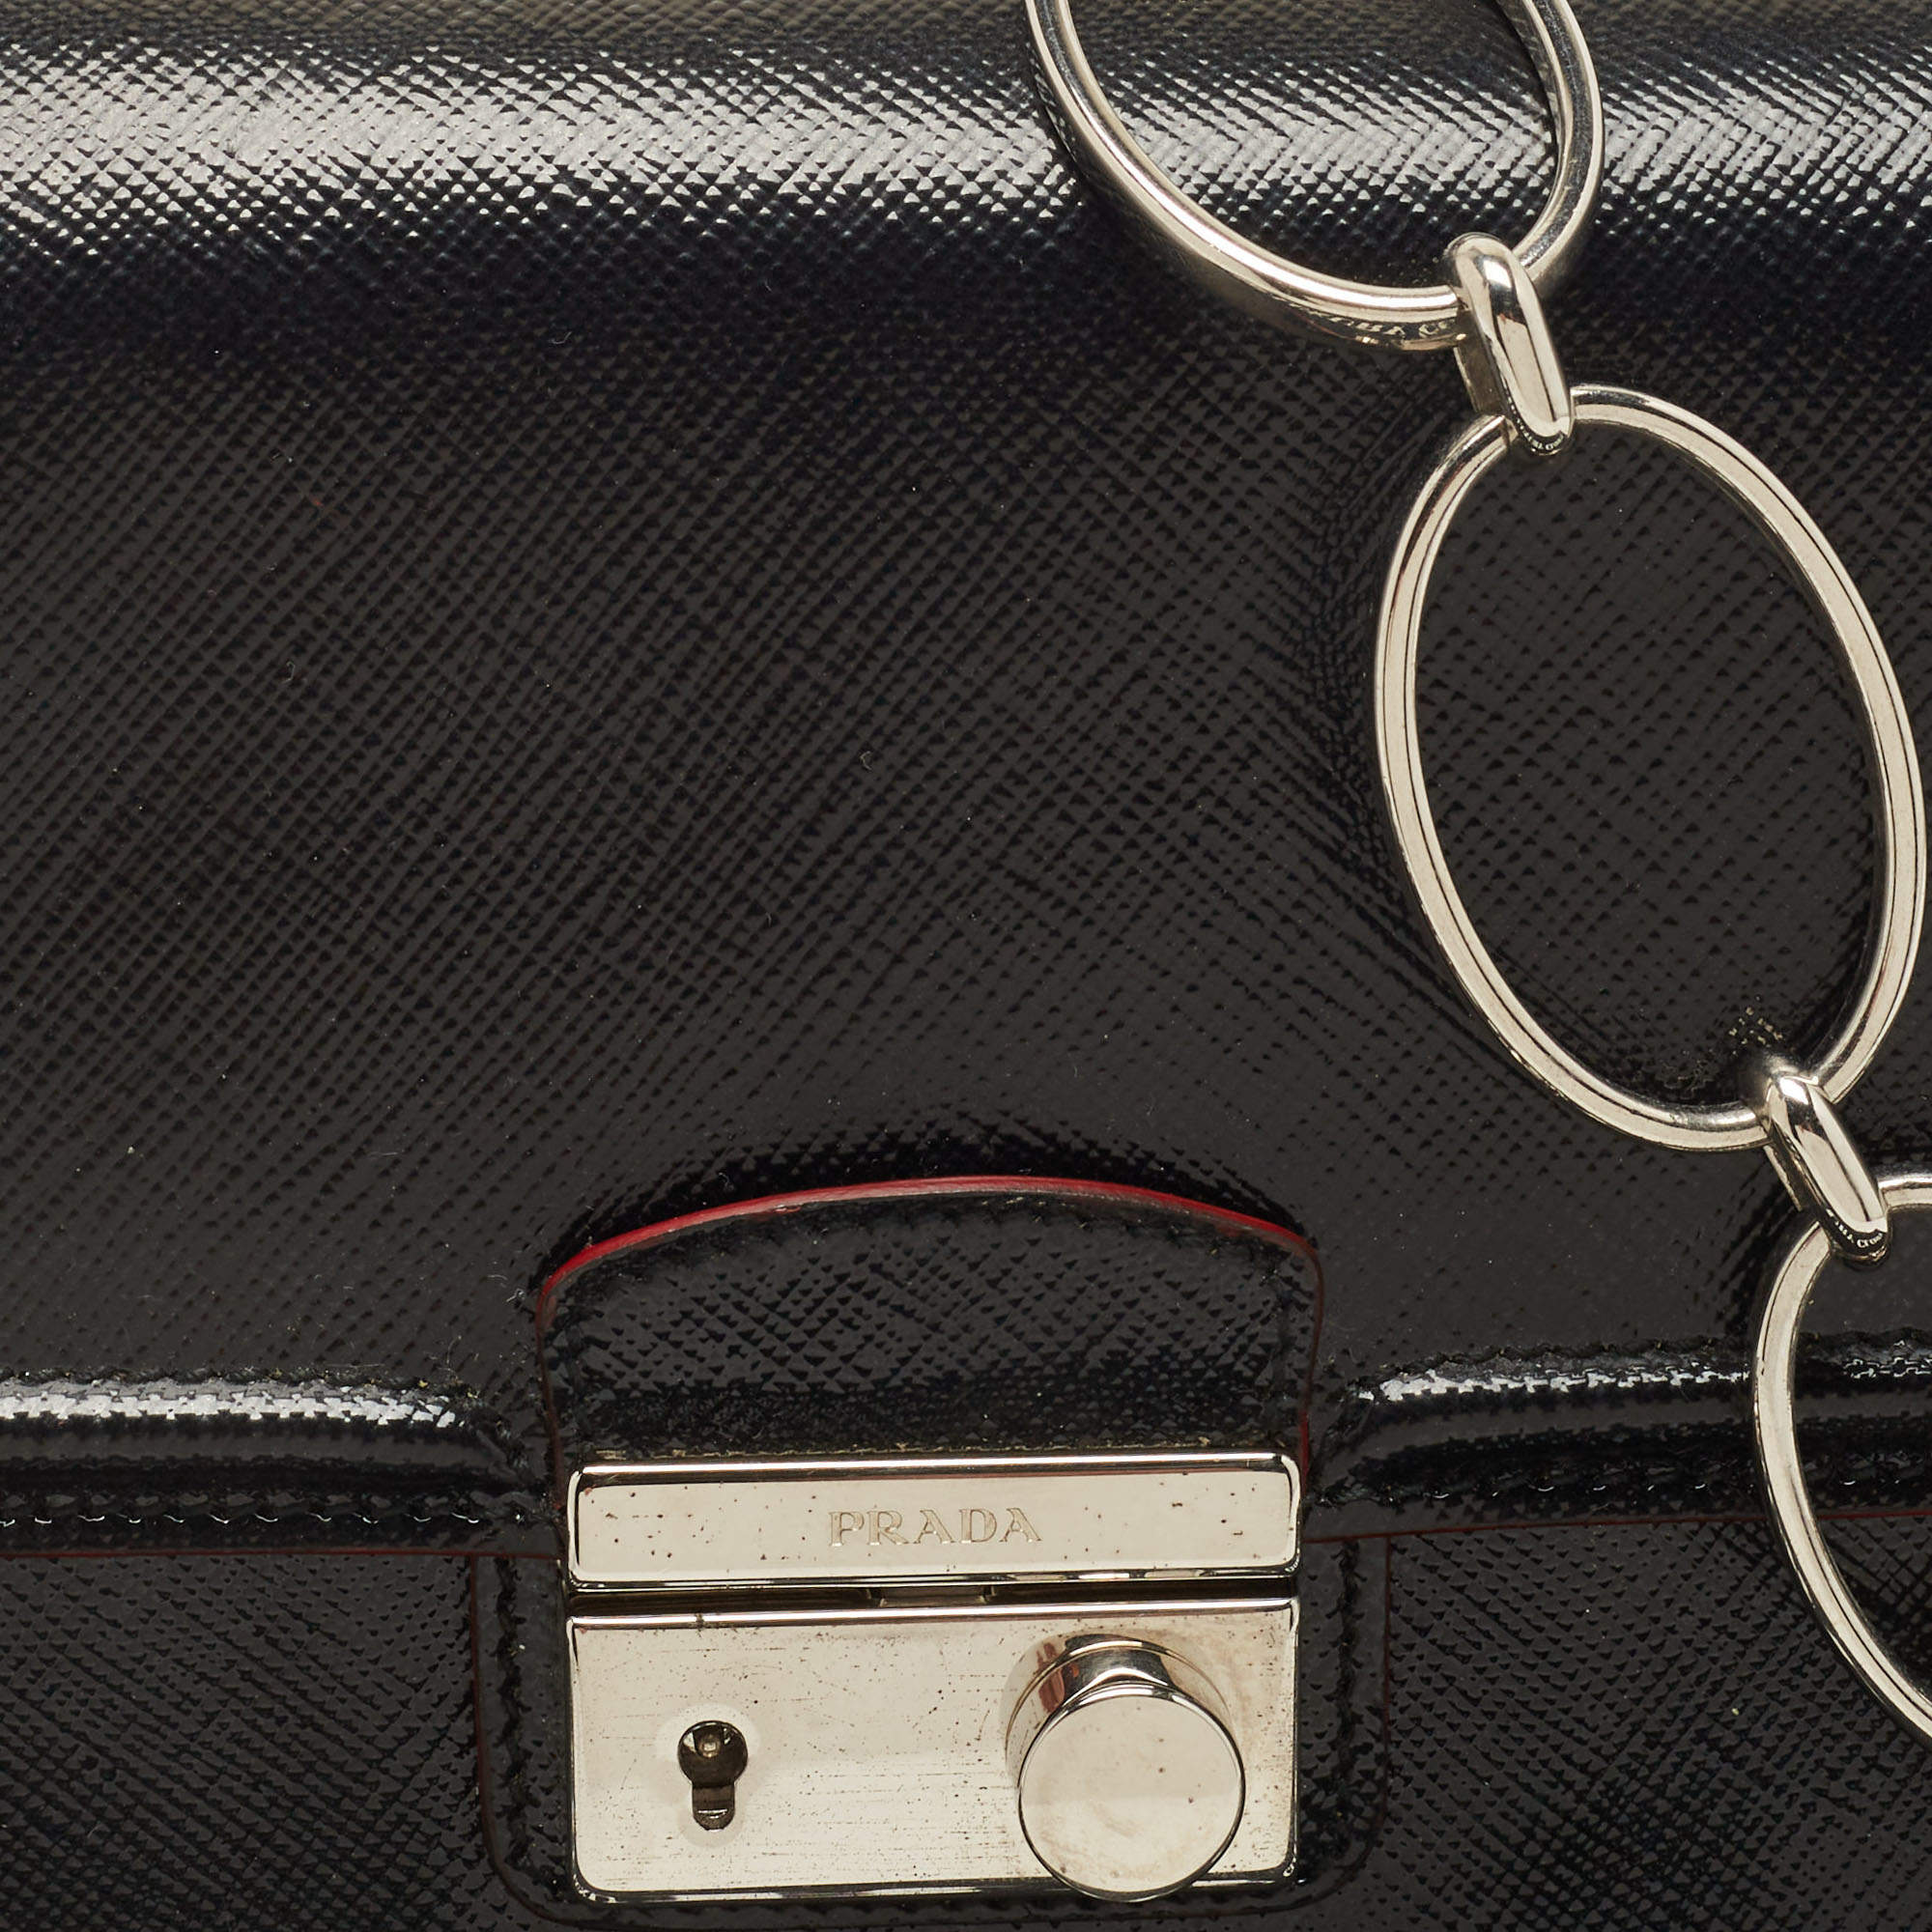 Prada Black Saffiano Patent Leather Sound Chain Shoulder Bag Prada